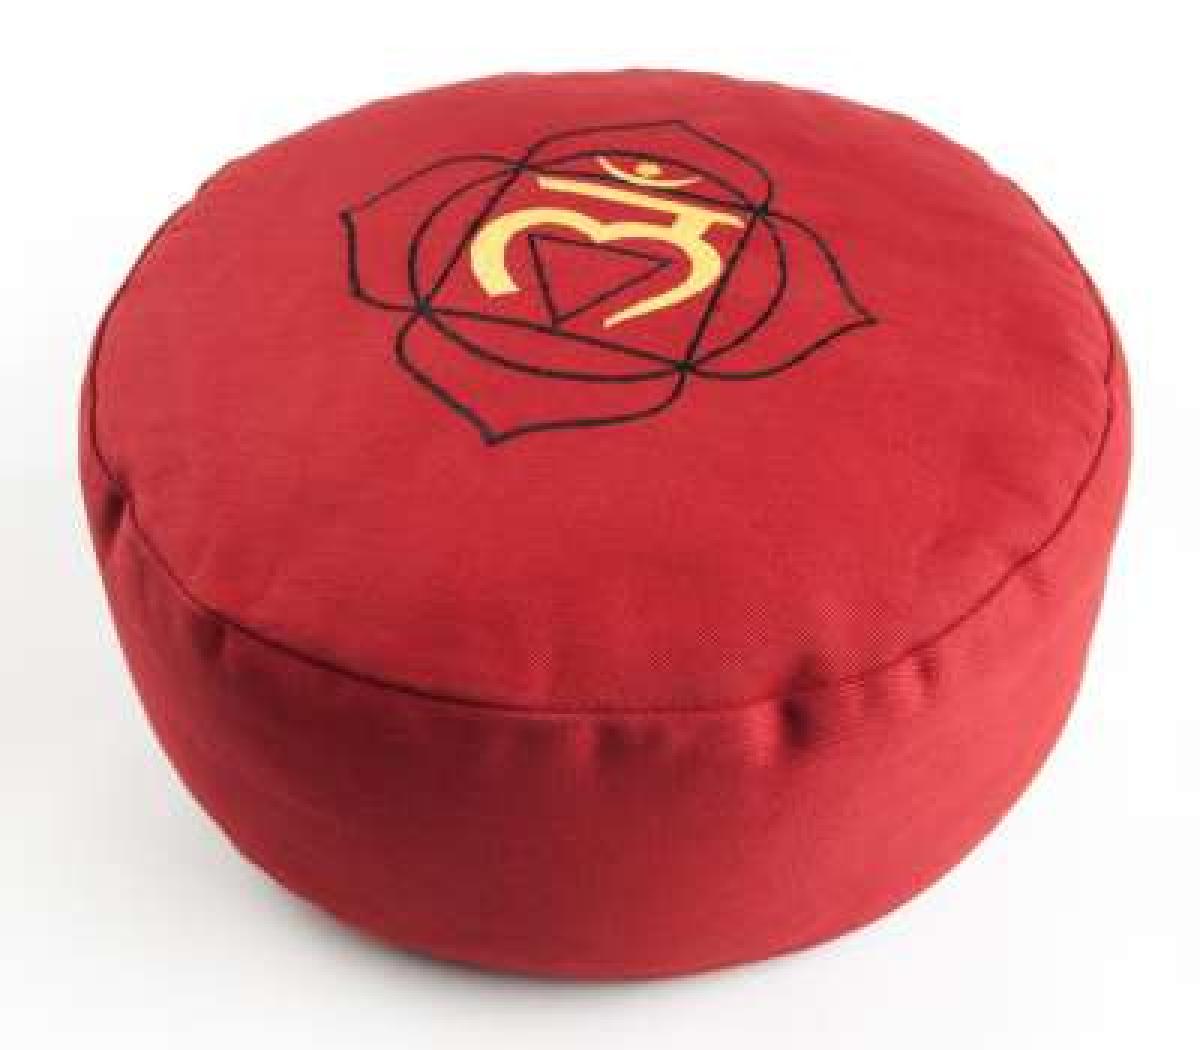 Meditation cushion root chakra - red ➤ www.bokken-shop.de buy › Yoga cushion ✓ Suitable for meditation, seminars. Your meditation specialist shop!